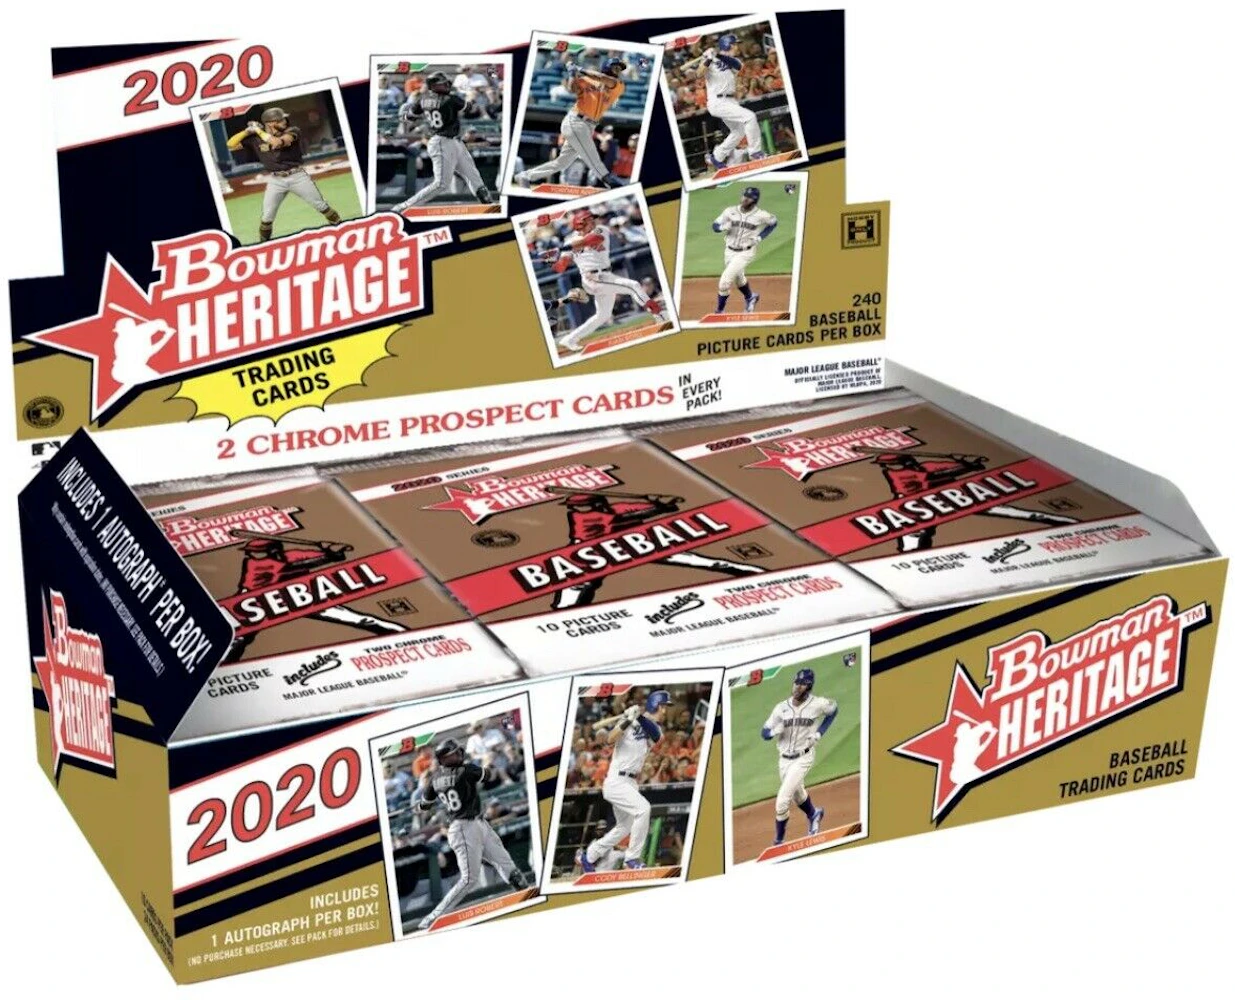 2020 Bowman Heritage Hobby Box 2020 US